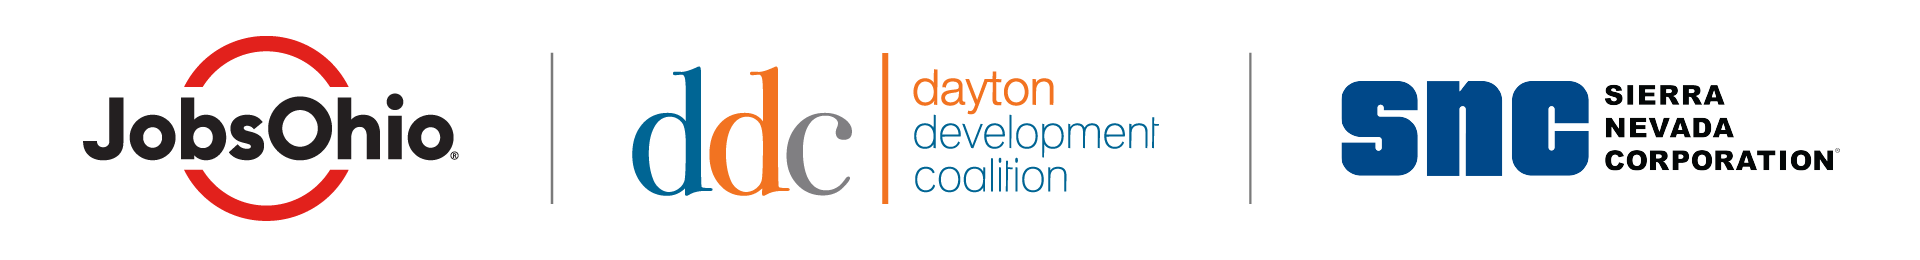 JobsOhio, Dayton Development Coalition, Sierra Nevada Corporation logos